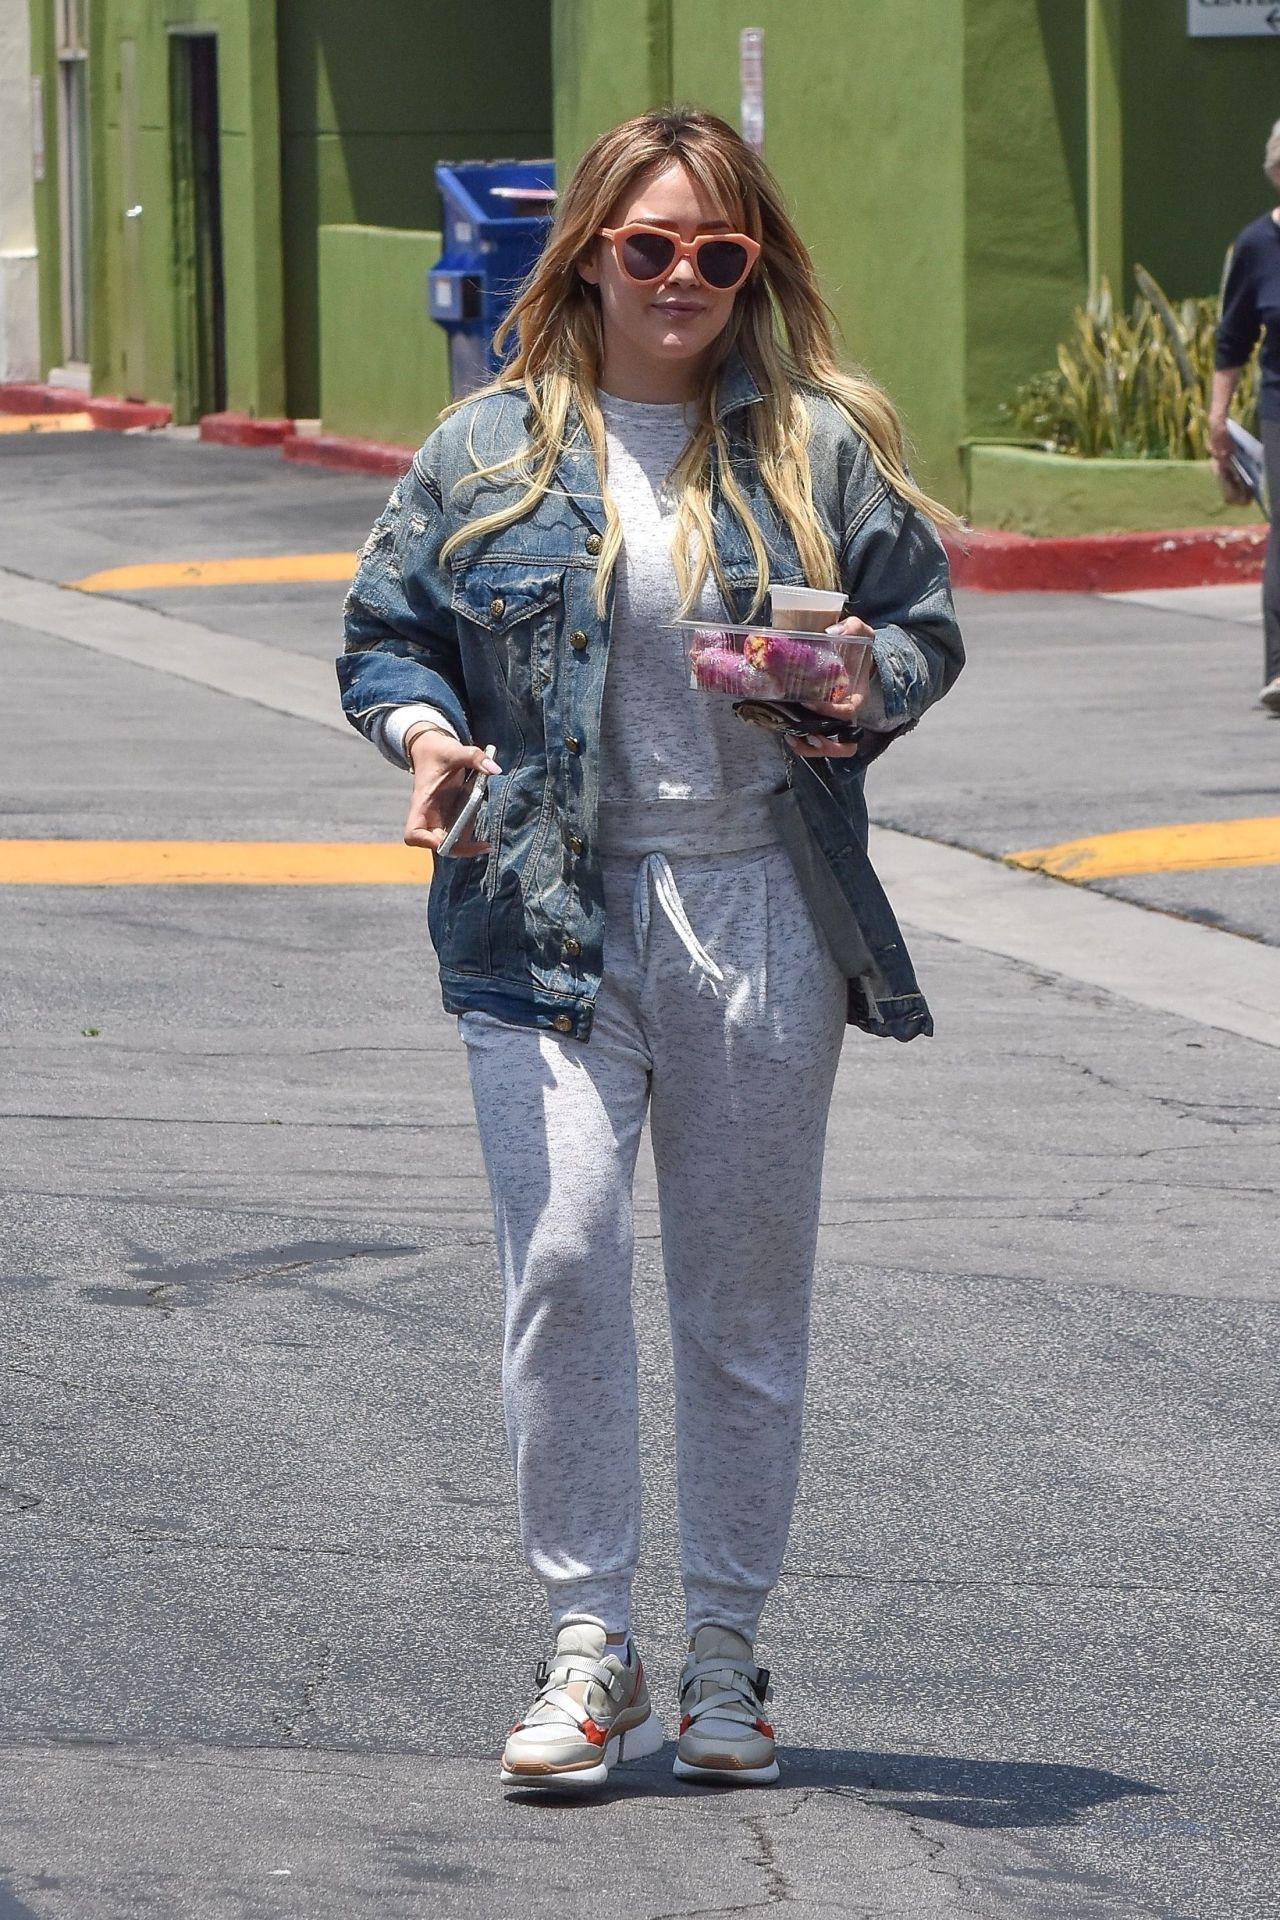 Hilary Duff Studio City November 26, 2019 – Star Style